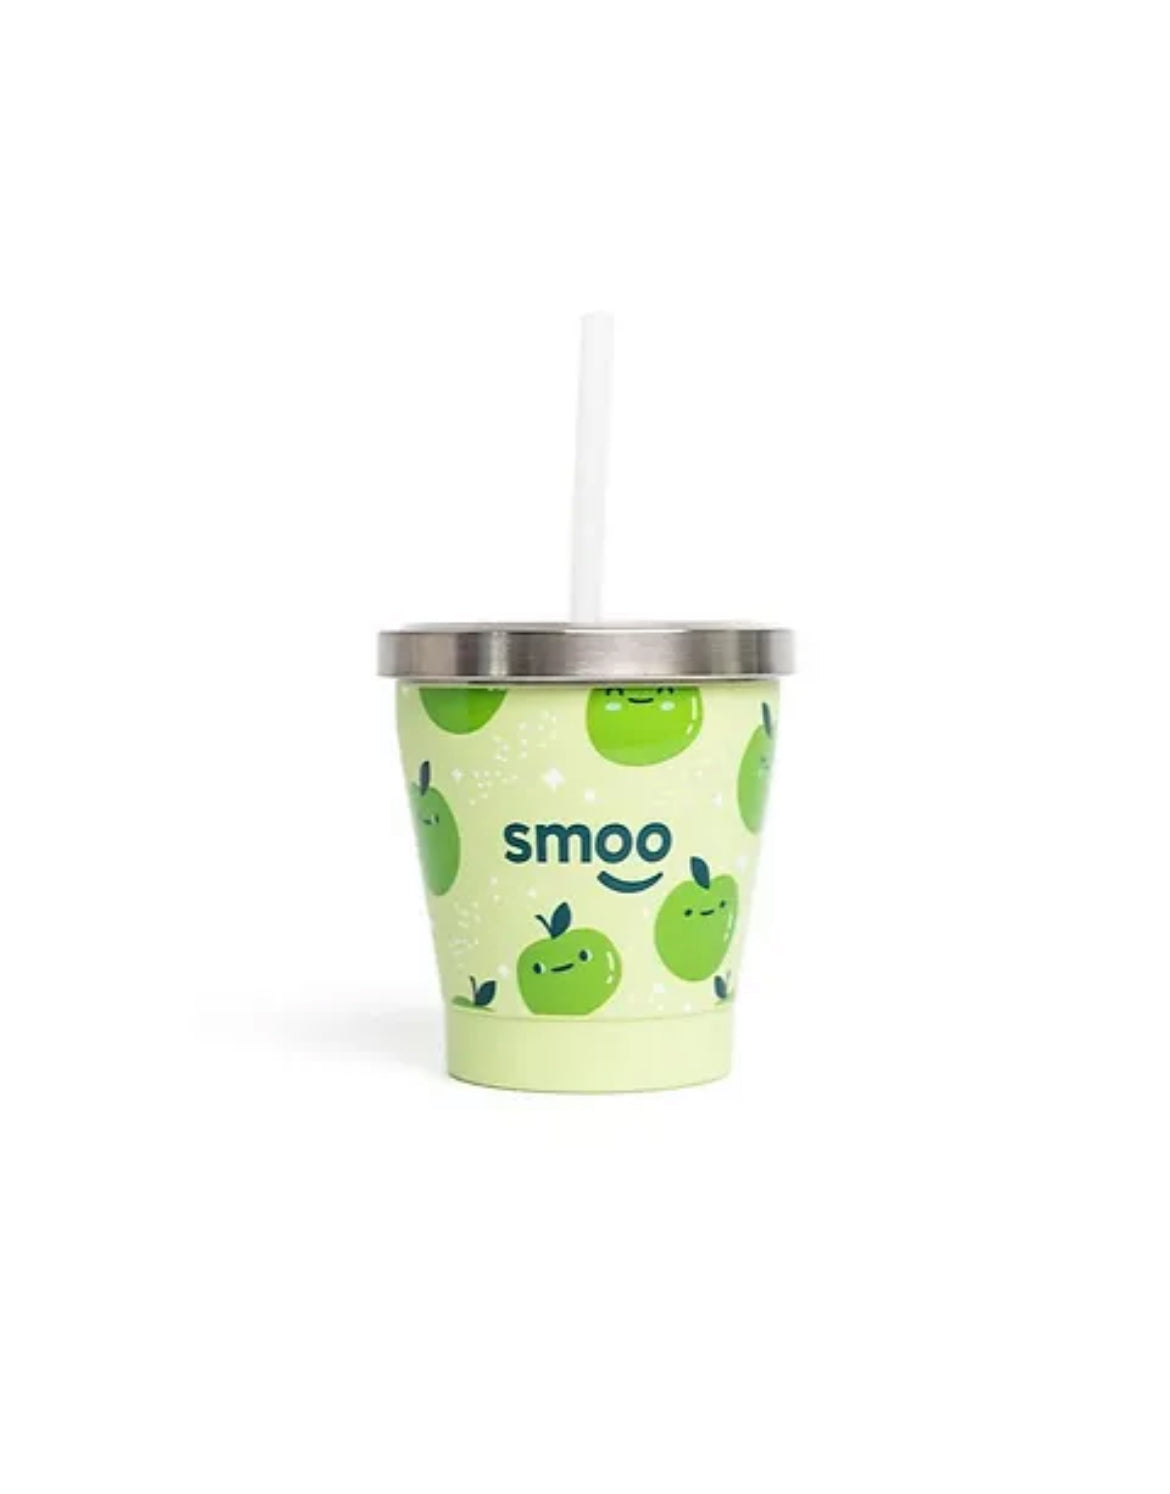 Smoo Apple Mini Smoothie Cup